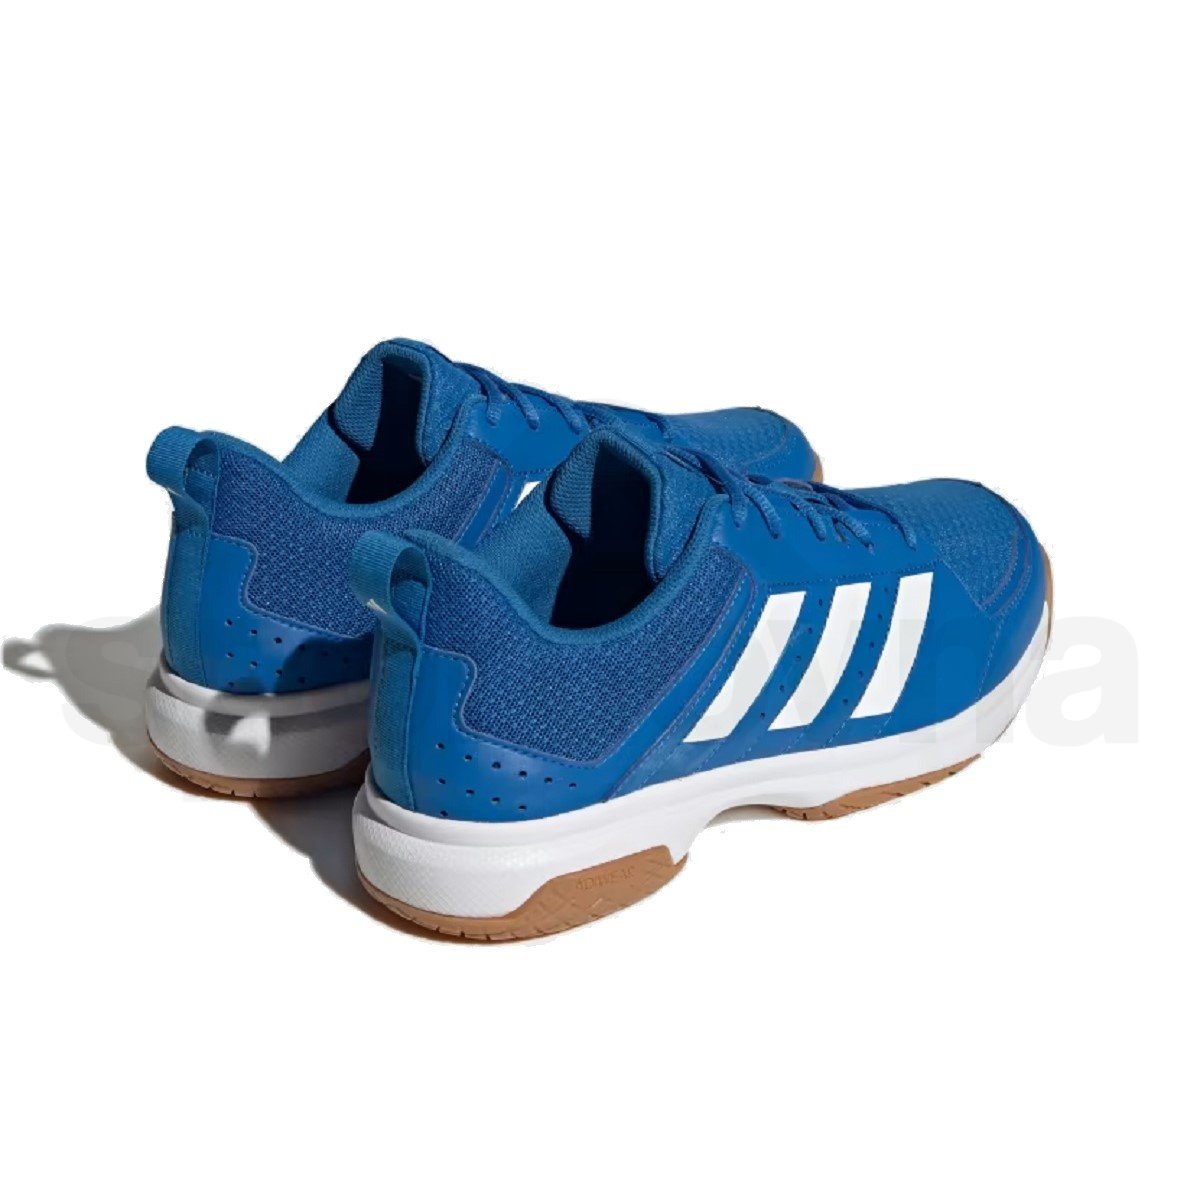 Obuv Adidas Ligra 7 M - modrá